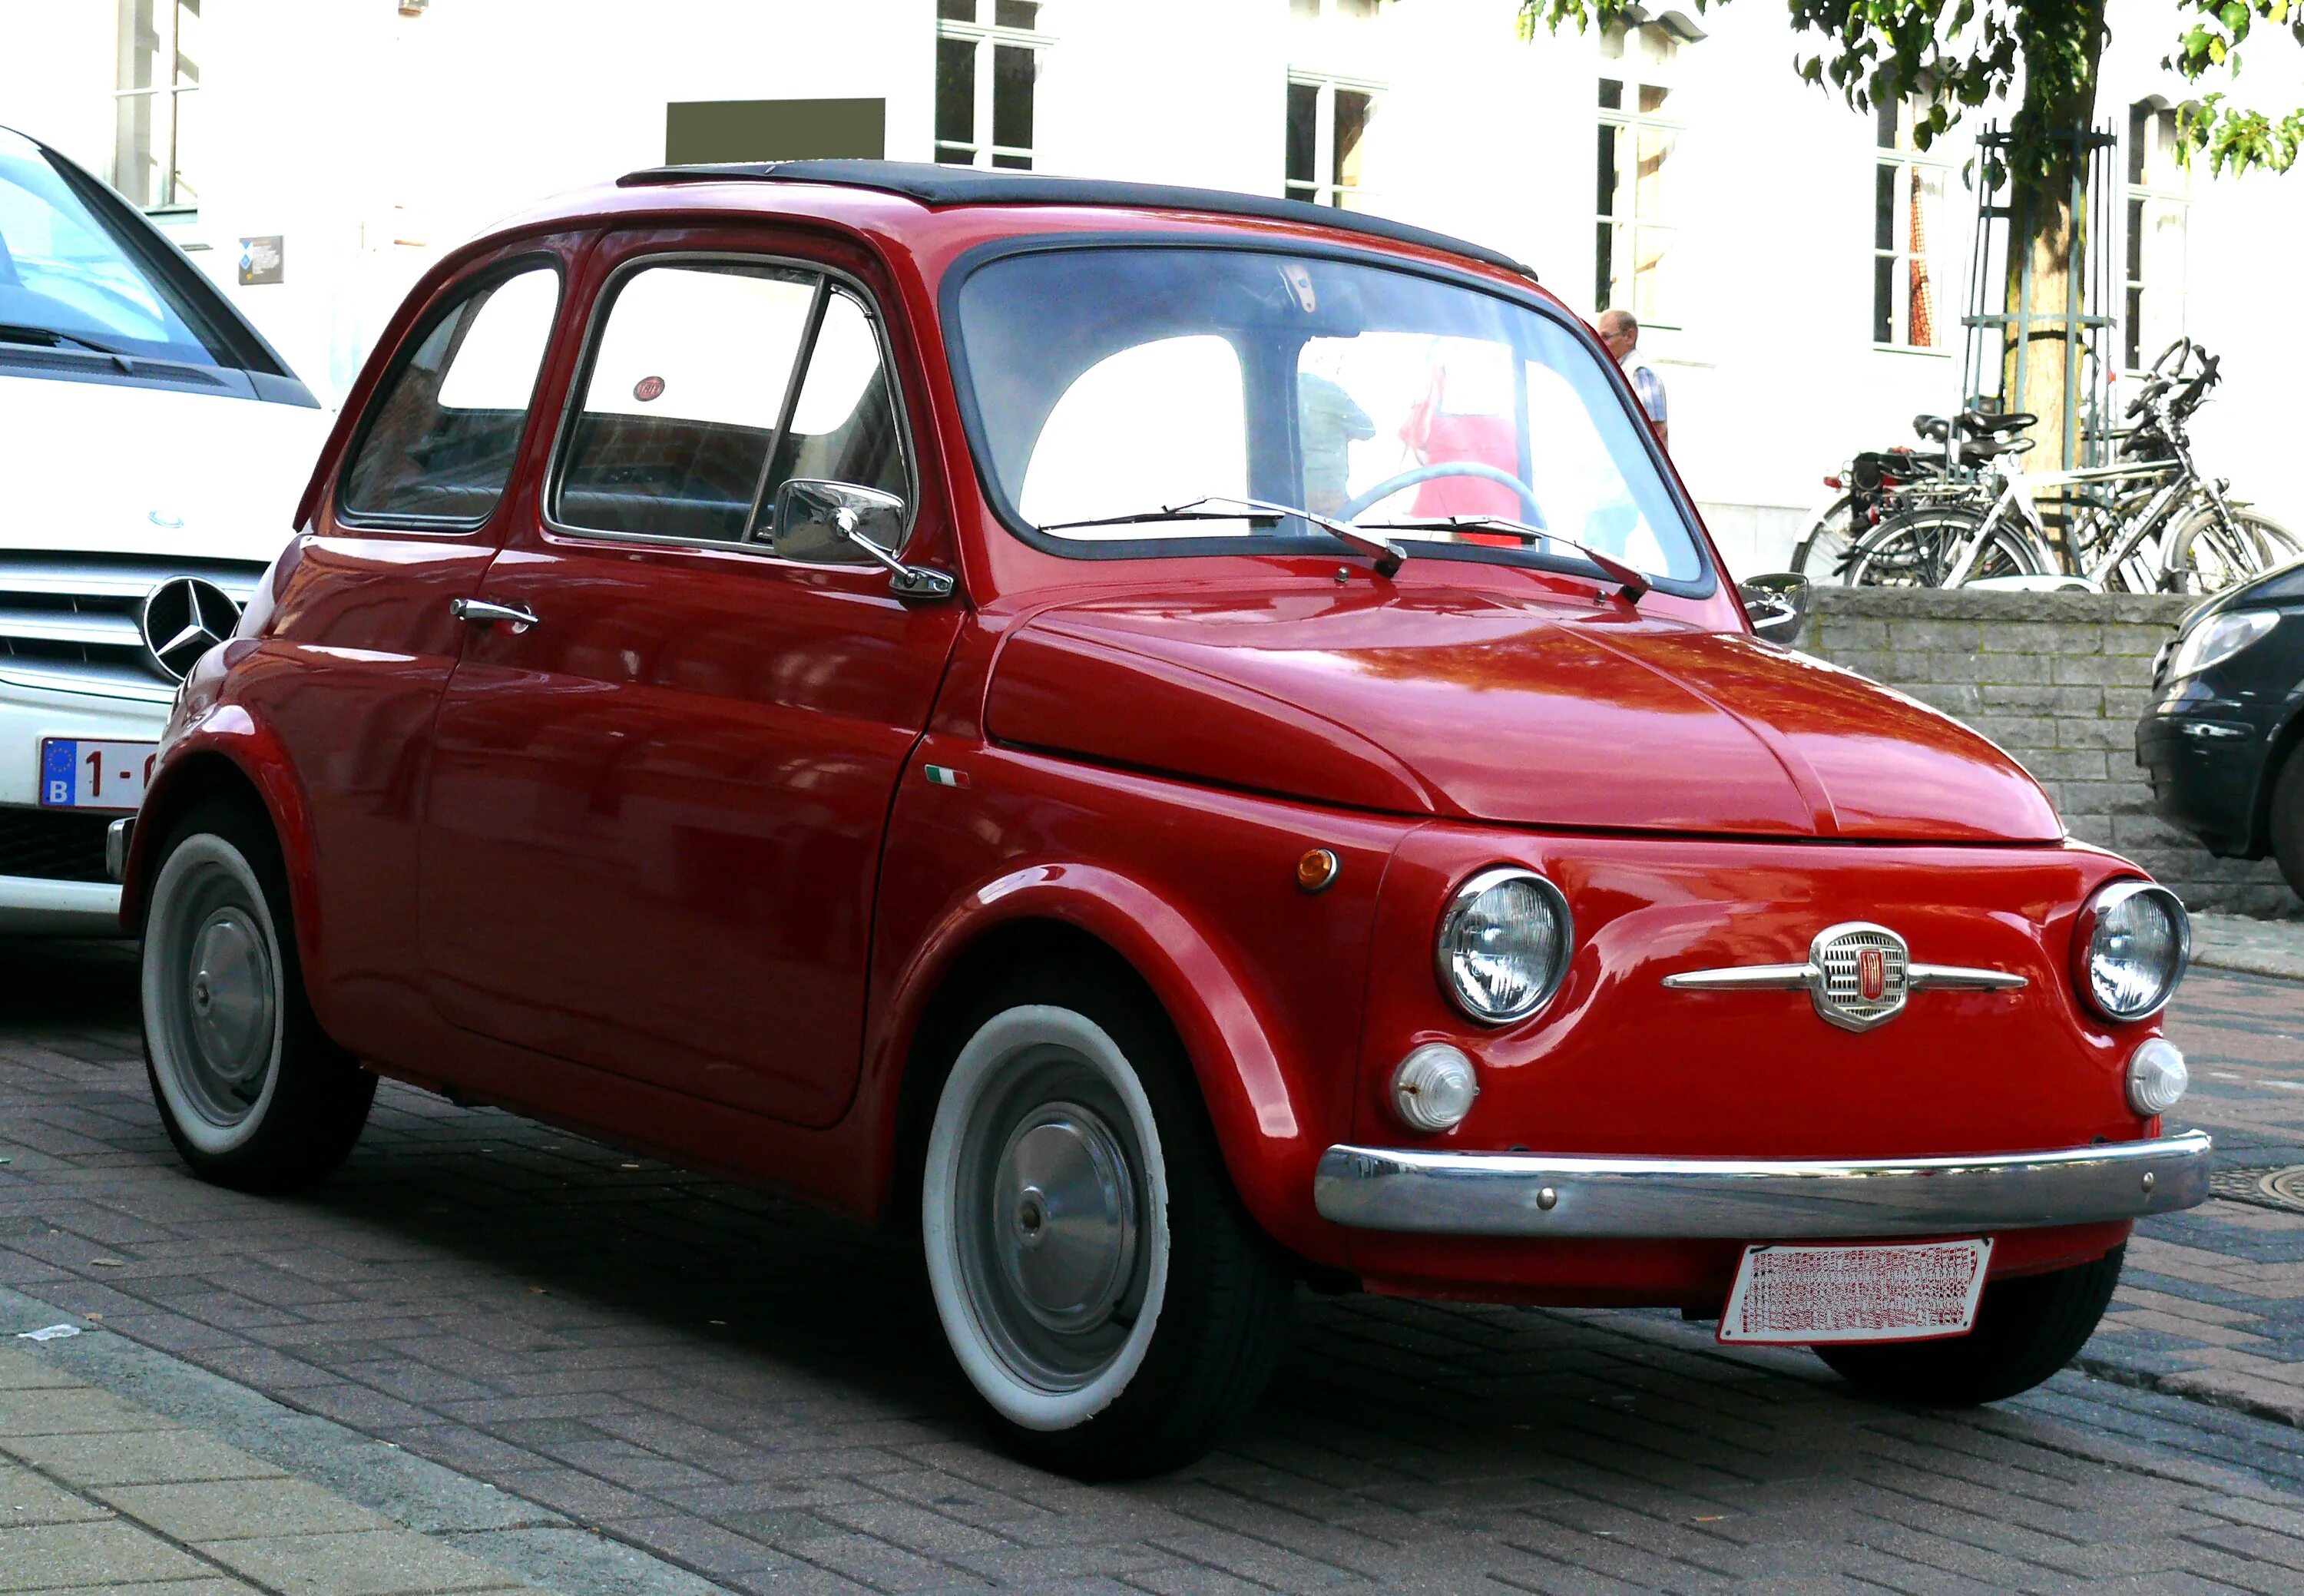 Фиат страна производитель. Фиат Нуова 500. Fiat nuova 500 d. Fiat 500 1959. Fiat nuova 500 1957 года.